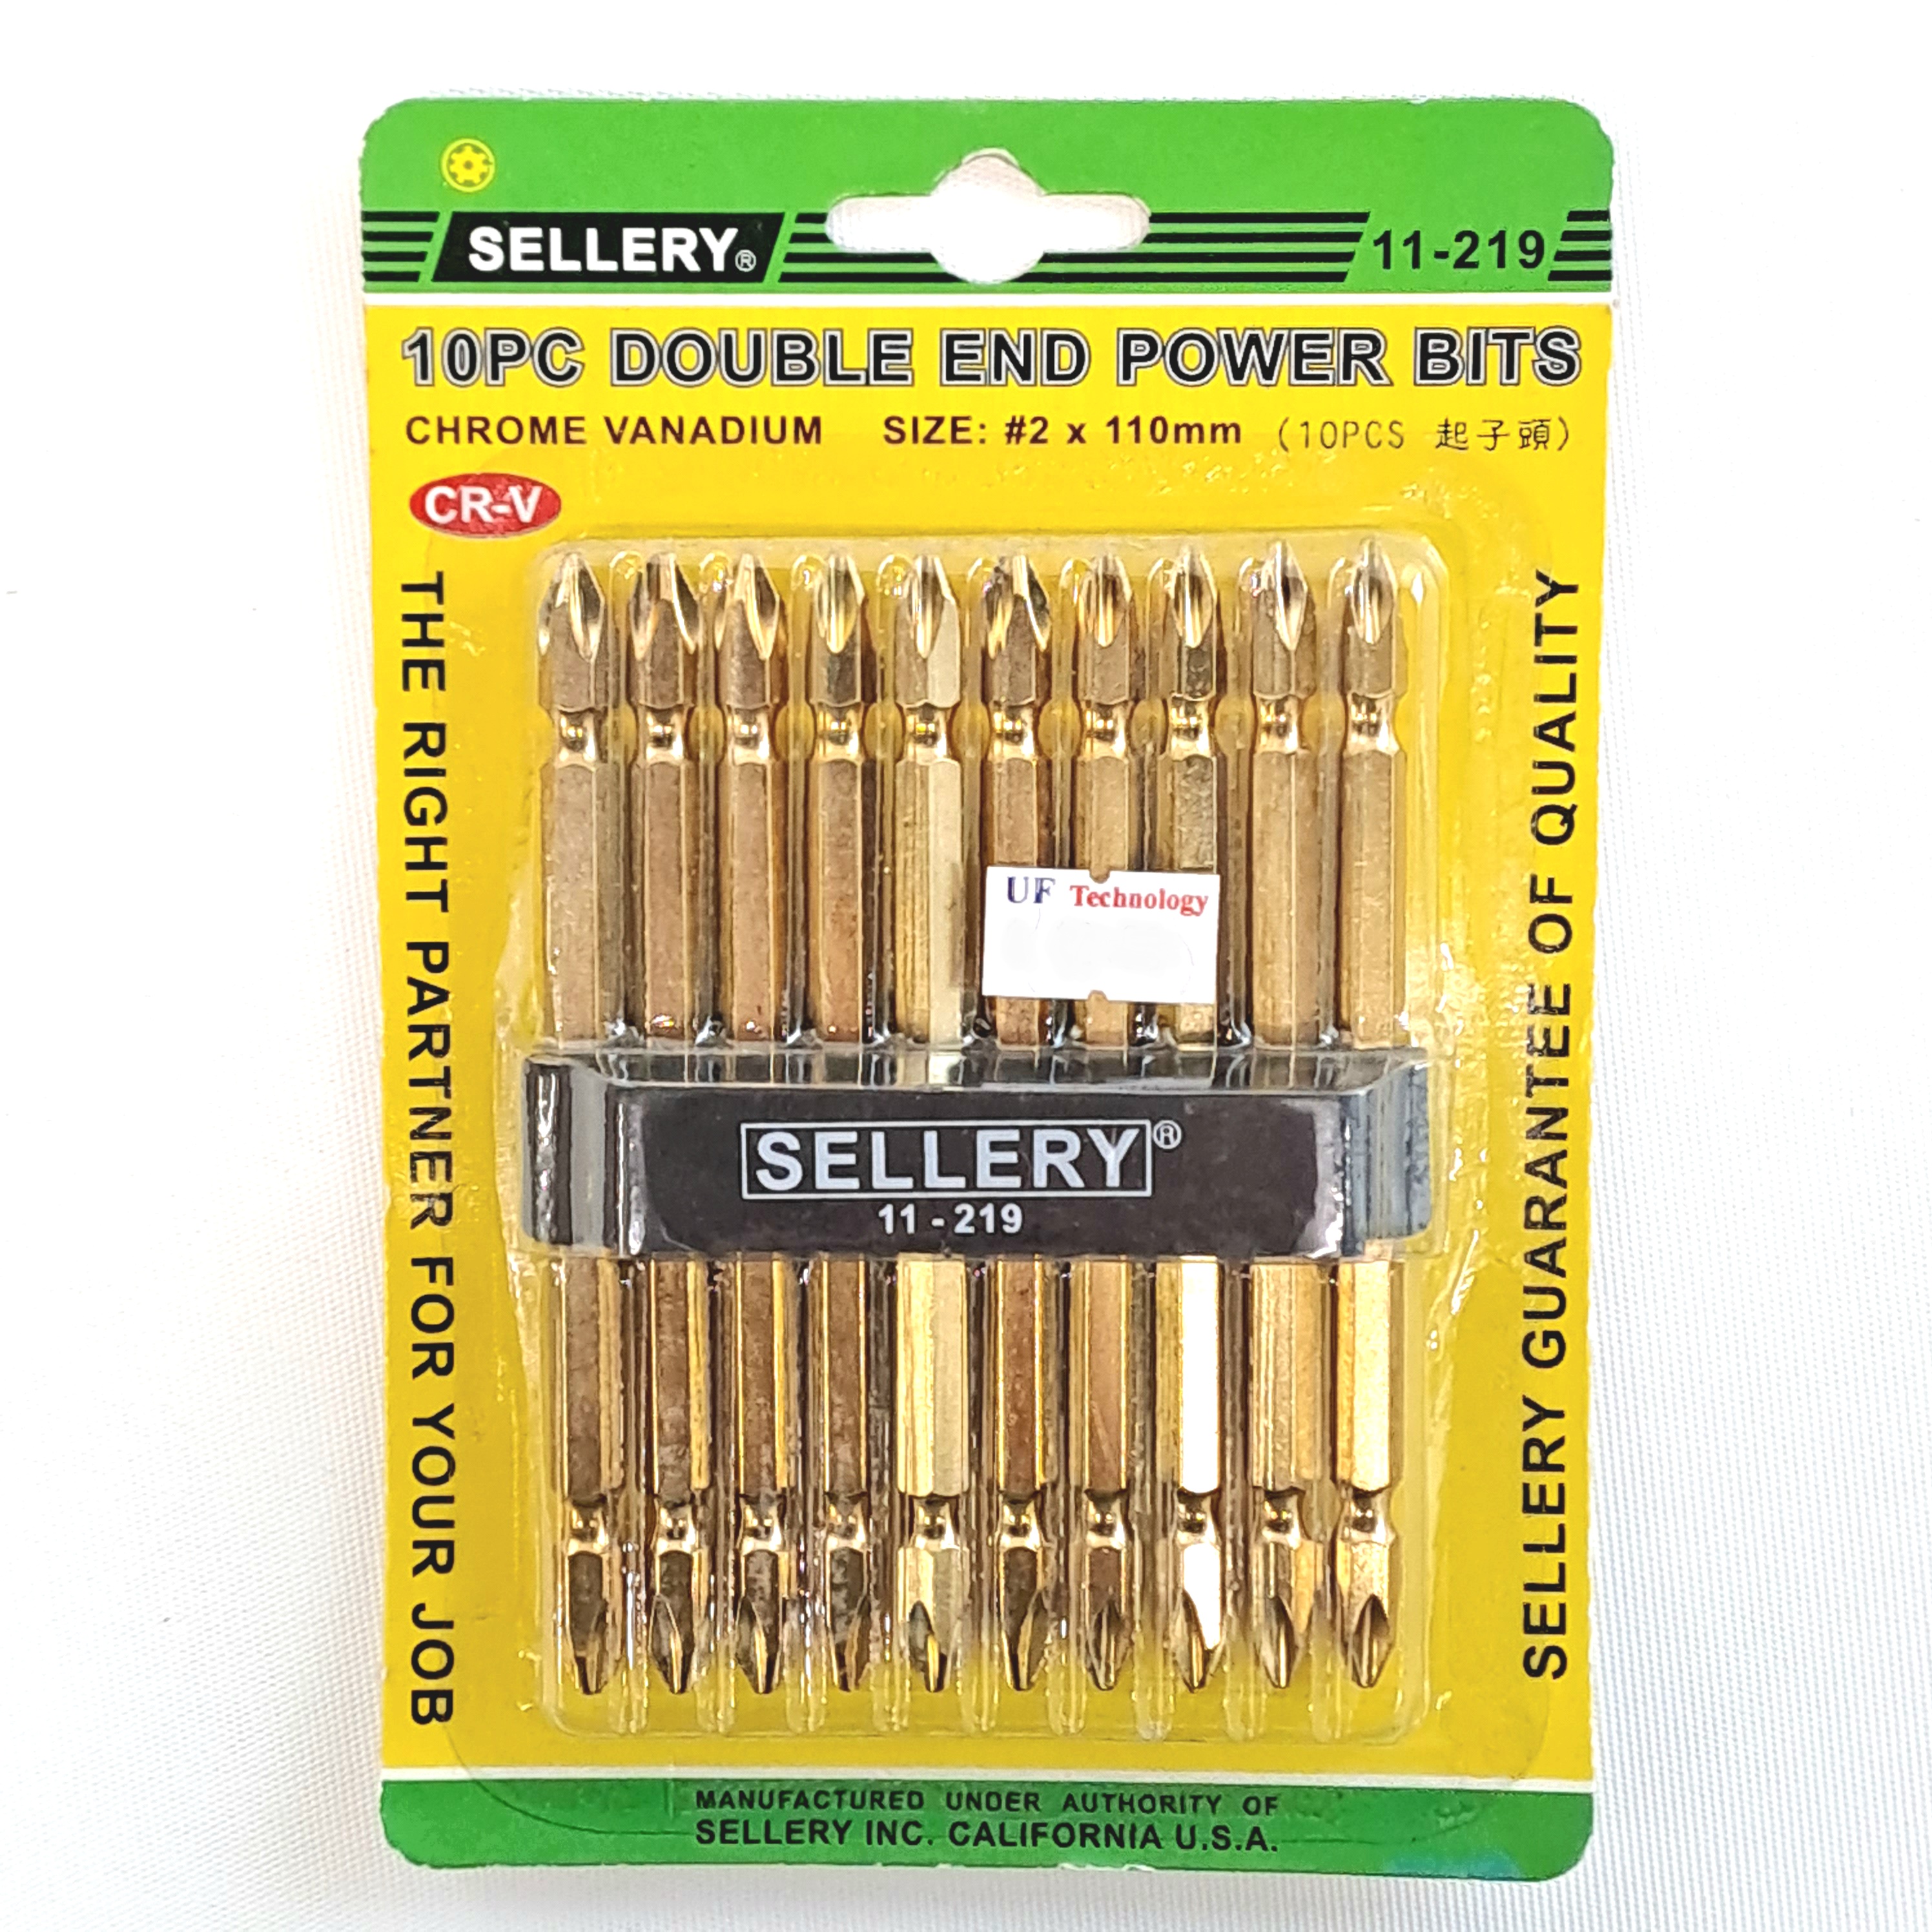 Sellery 11-219 10pcs Double End Power Bits #2 x 110mm